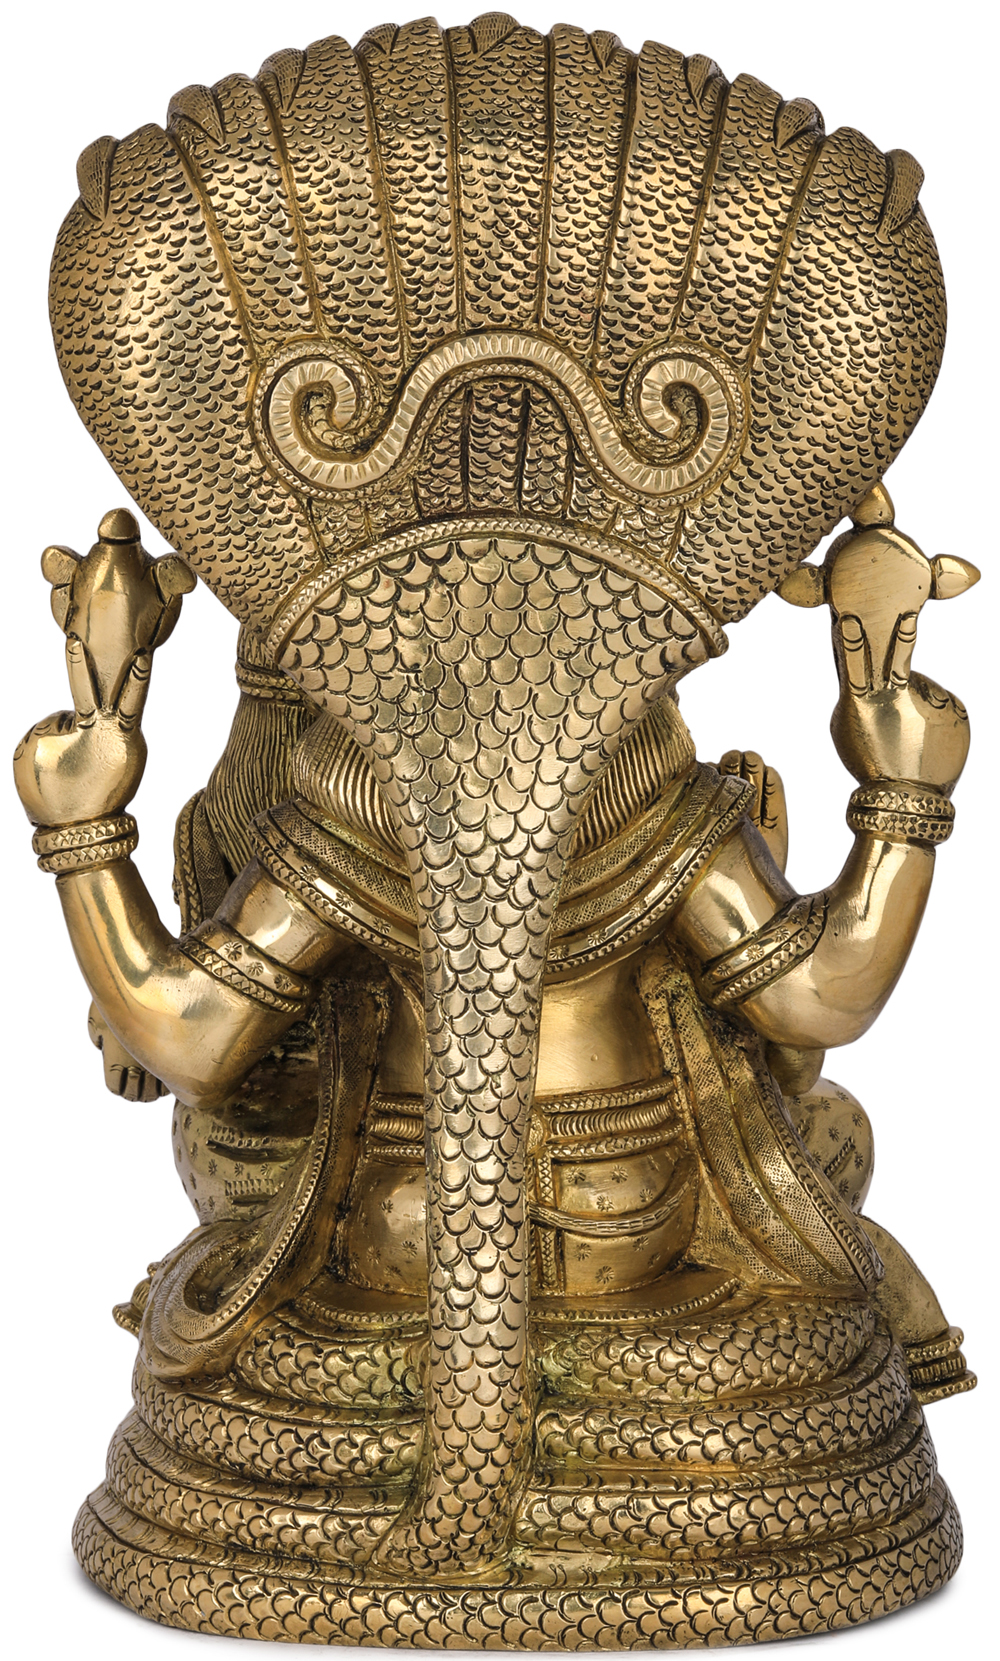 Fine Quality Narasimha with Lakshmi (The fourth Avatar of Lord Vishnu)